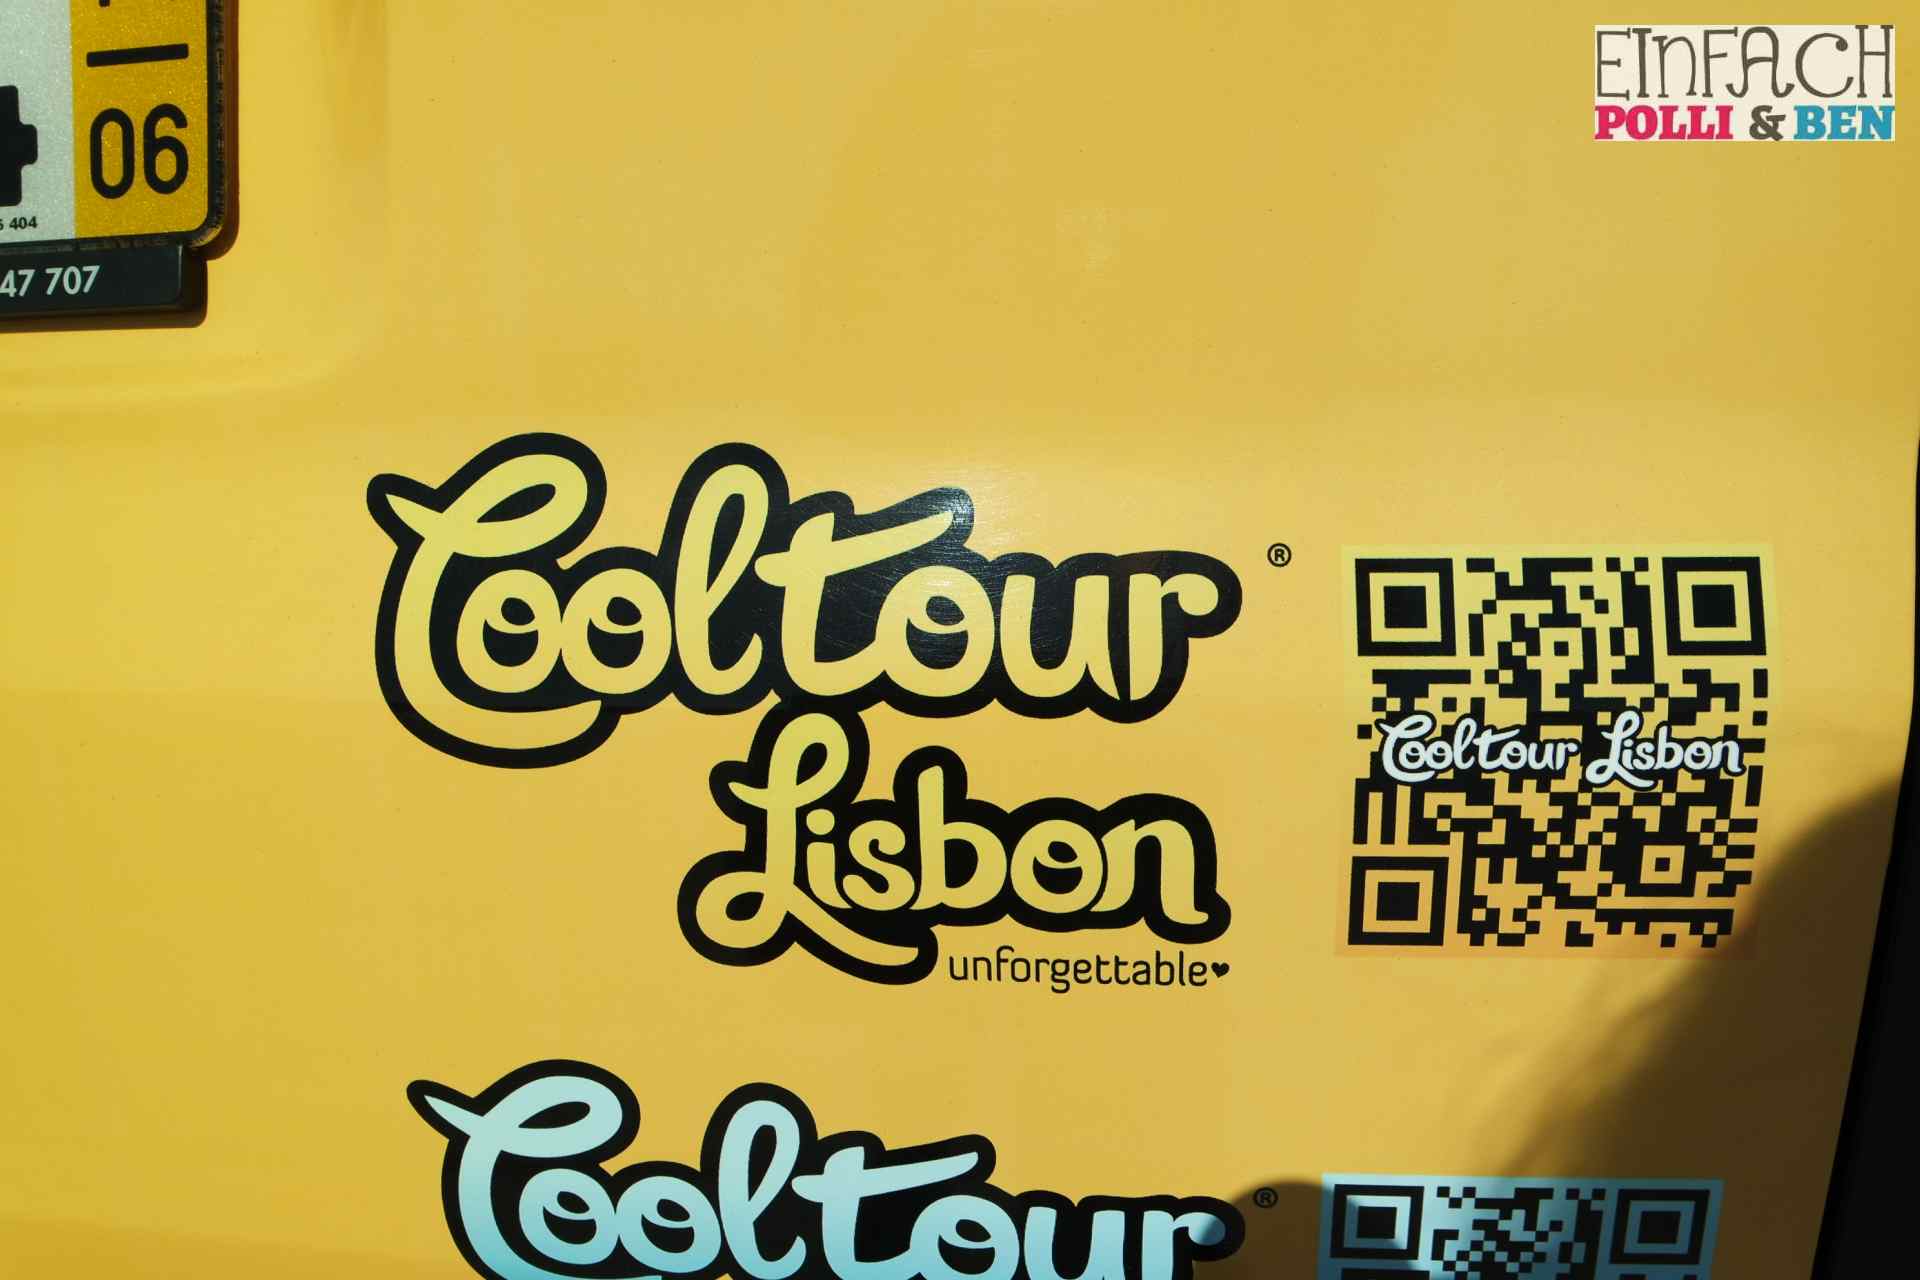 Cool Tours Portugal Lissabon